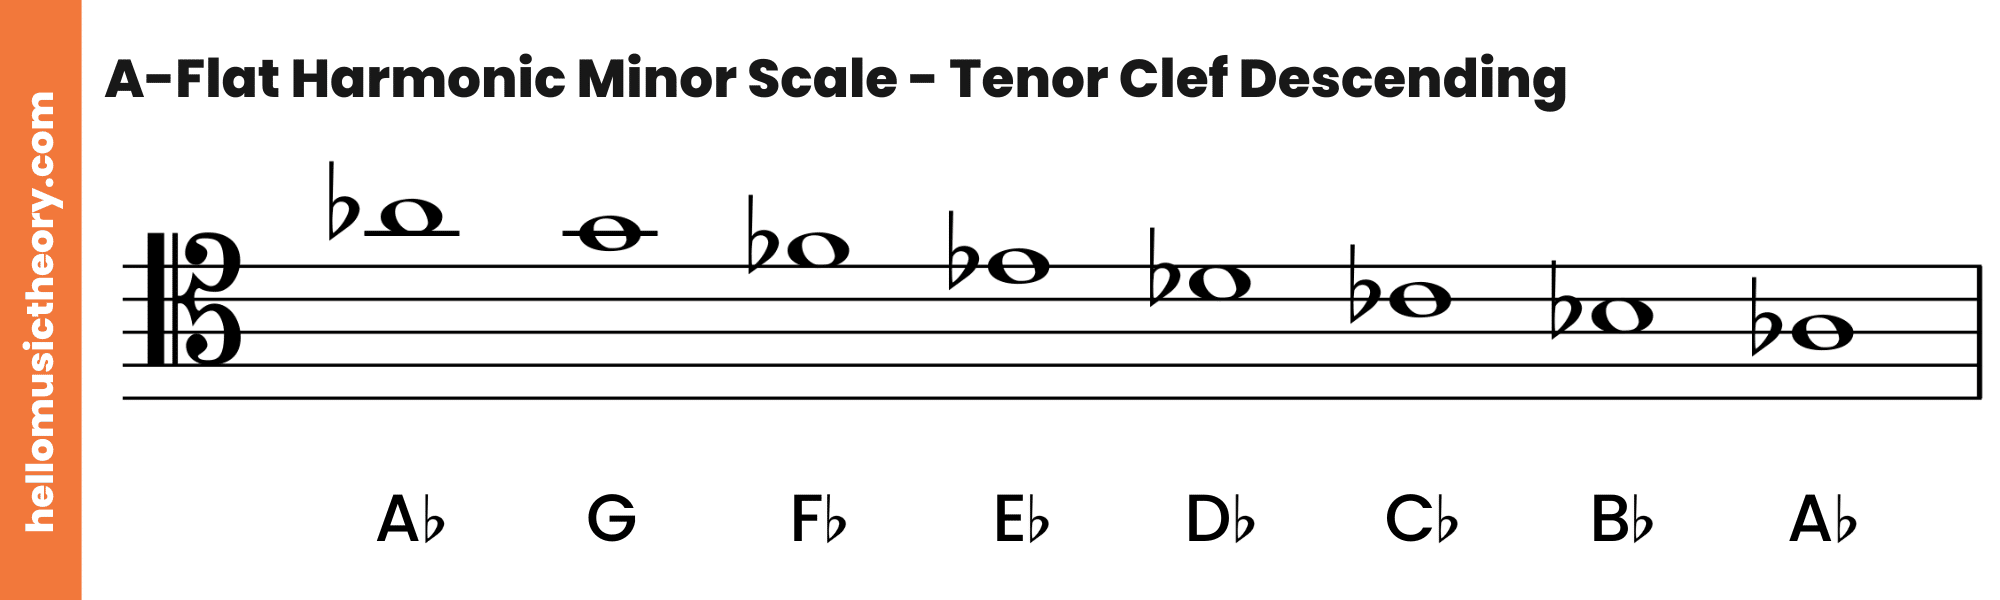 A-Flat Harmonic Minor Scale Tenor Clef Descending